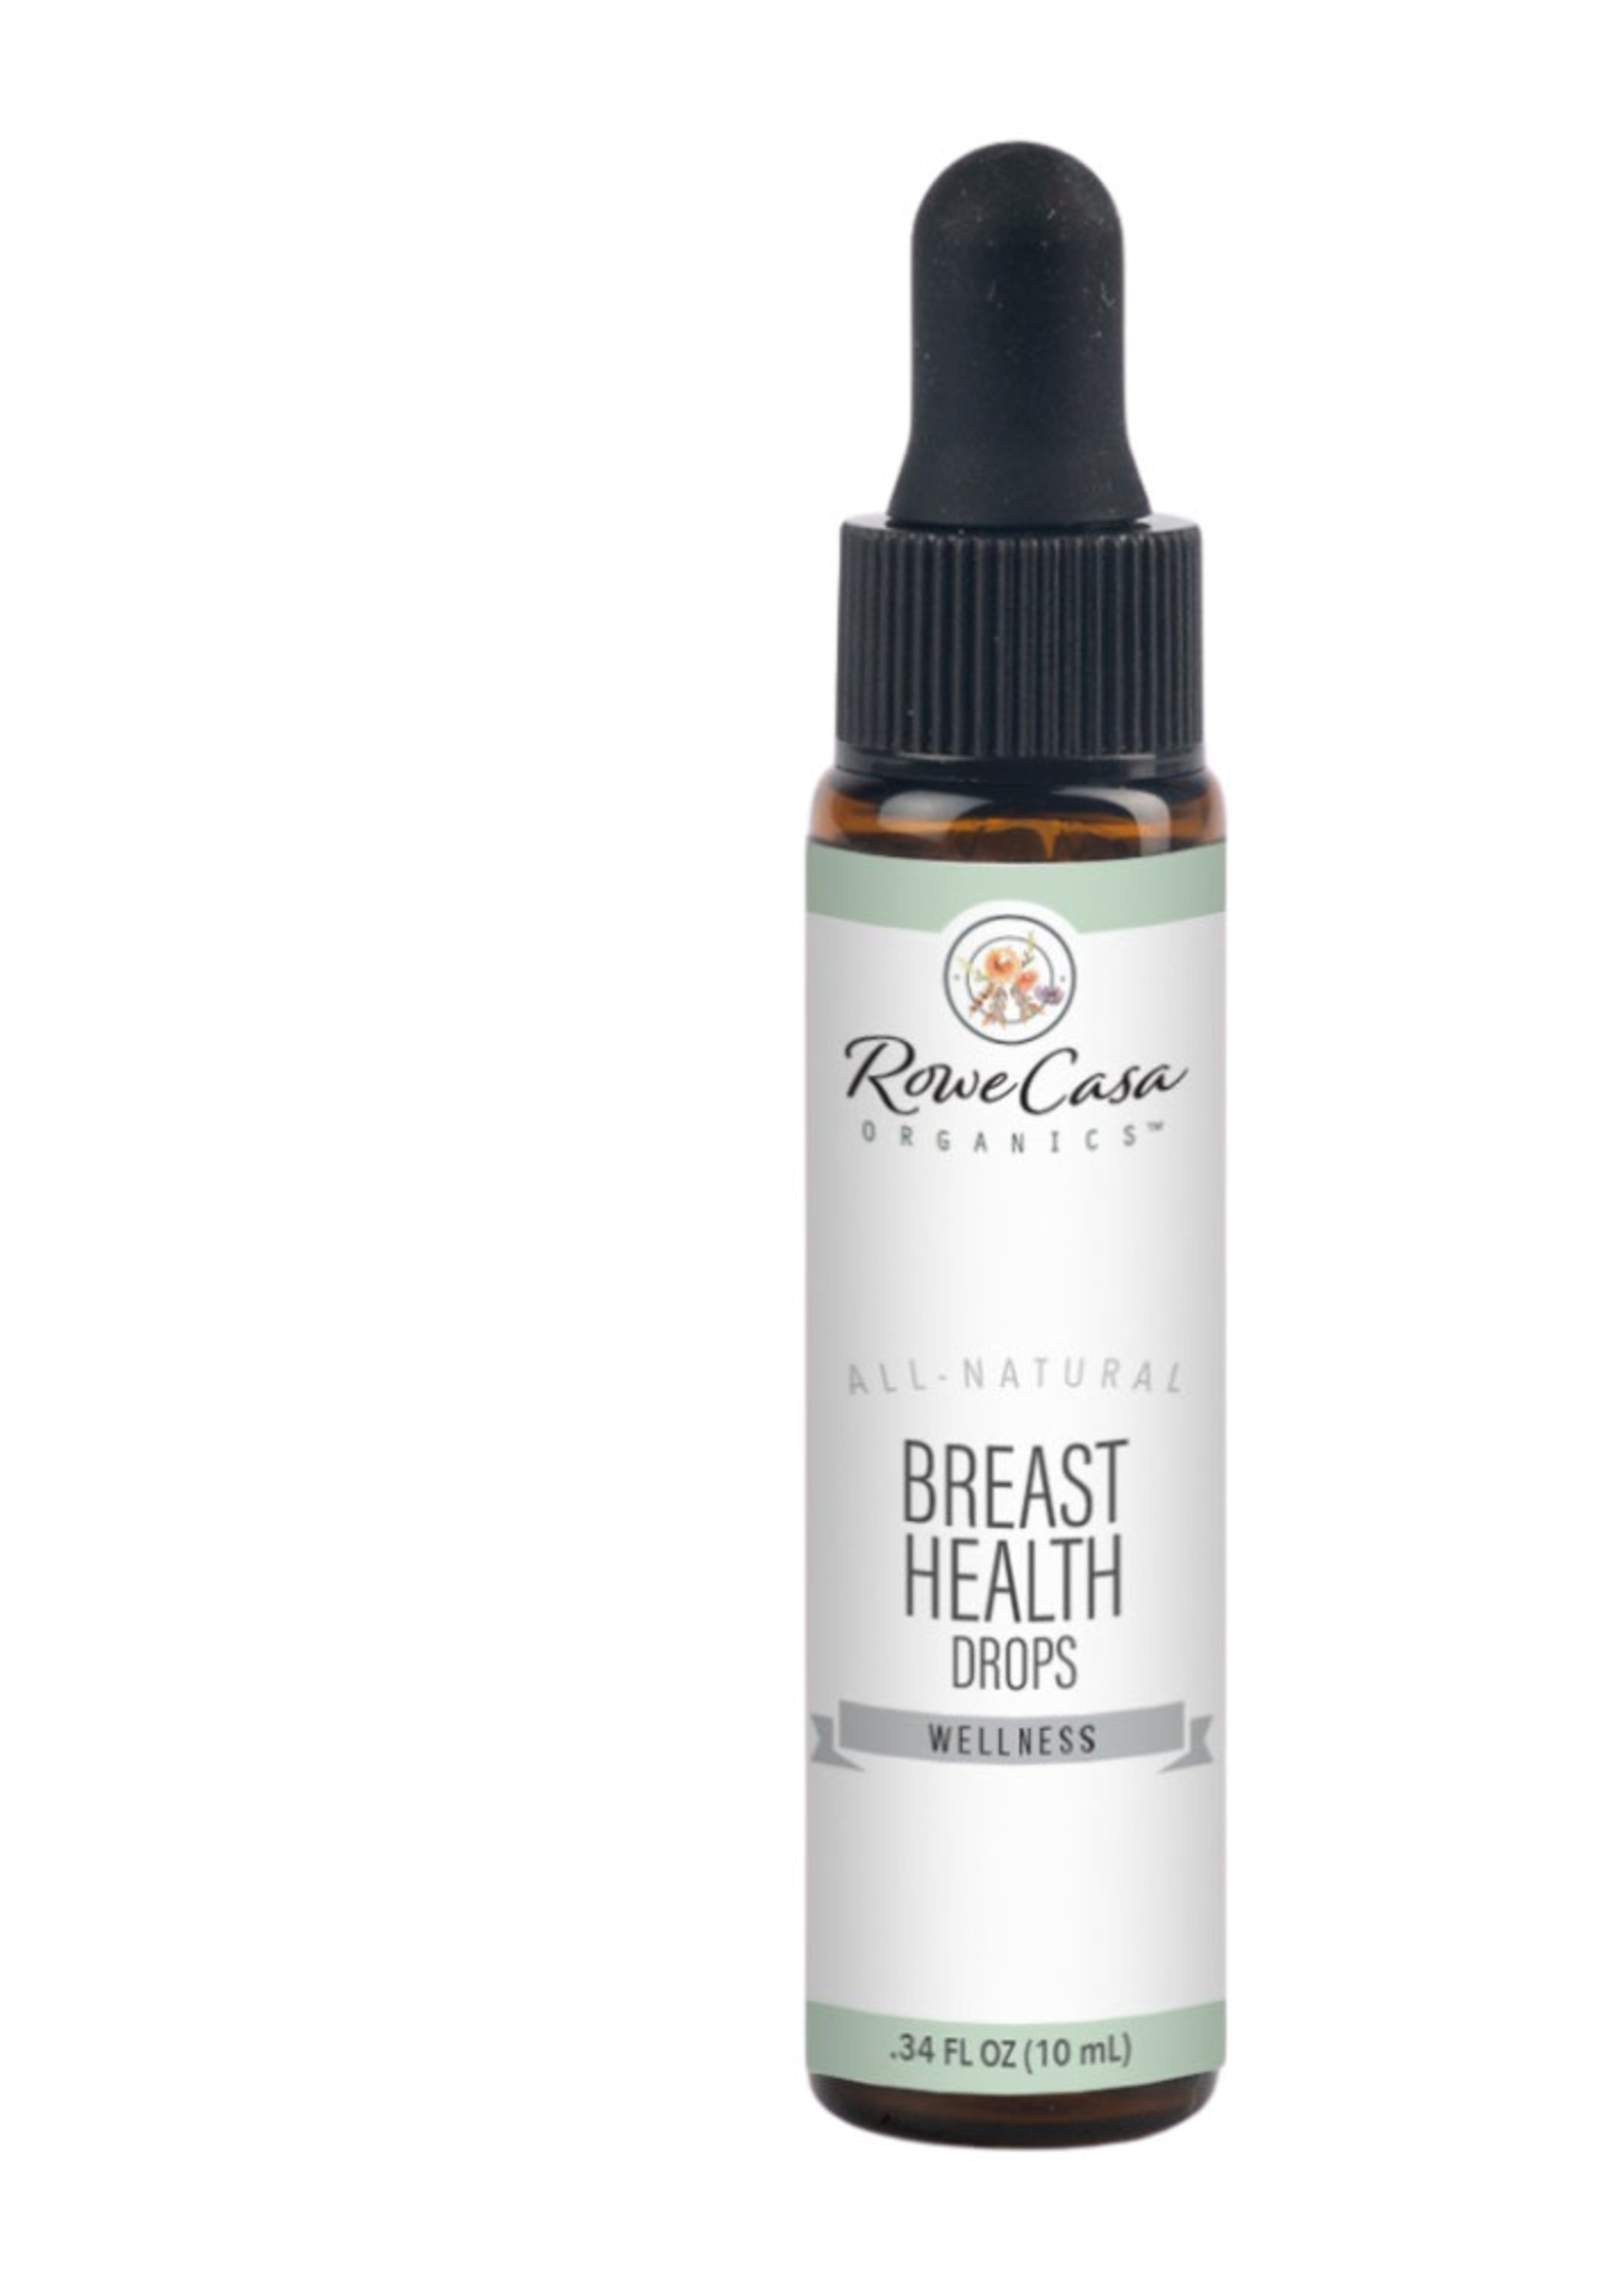 Rowe Casa Organics BREAST HEALTH DROPS